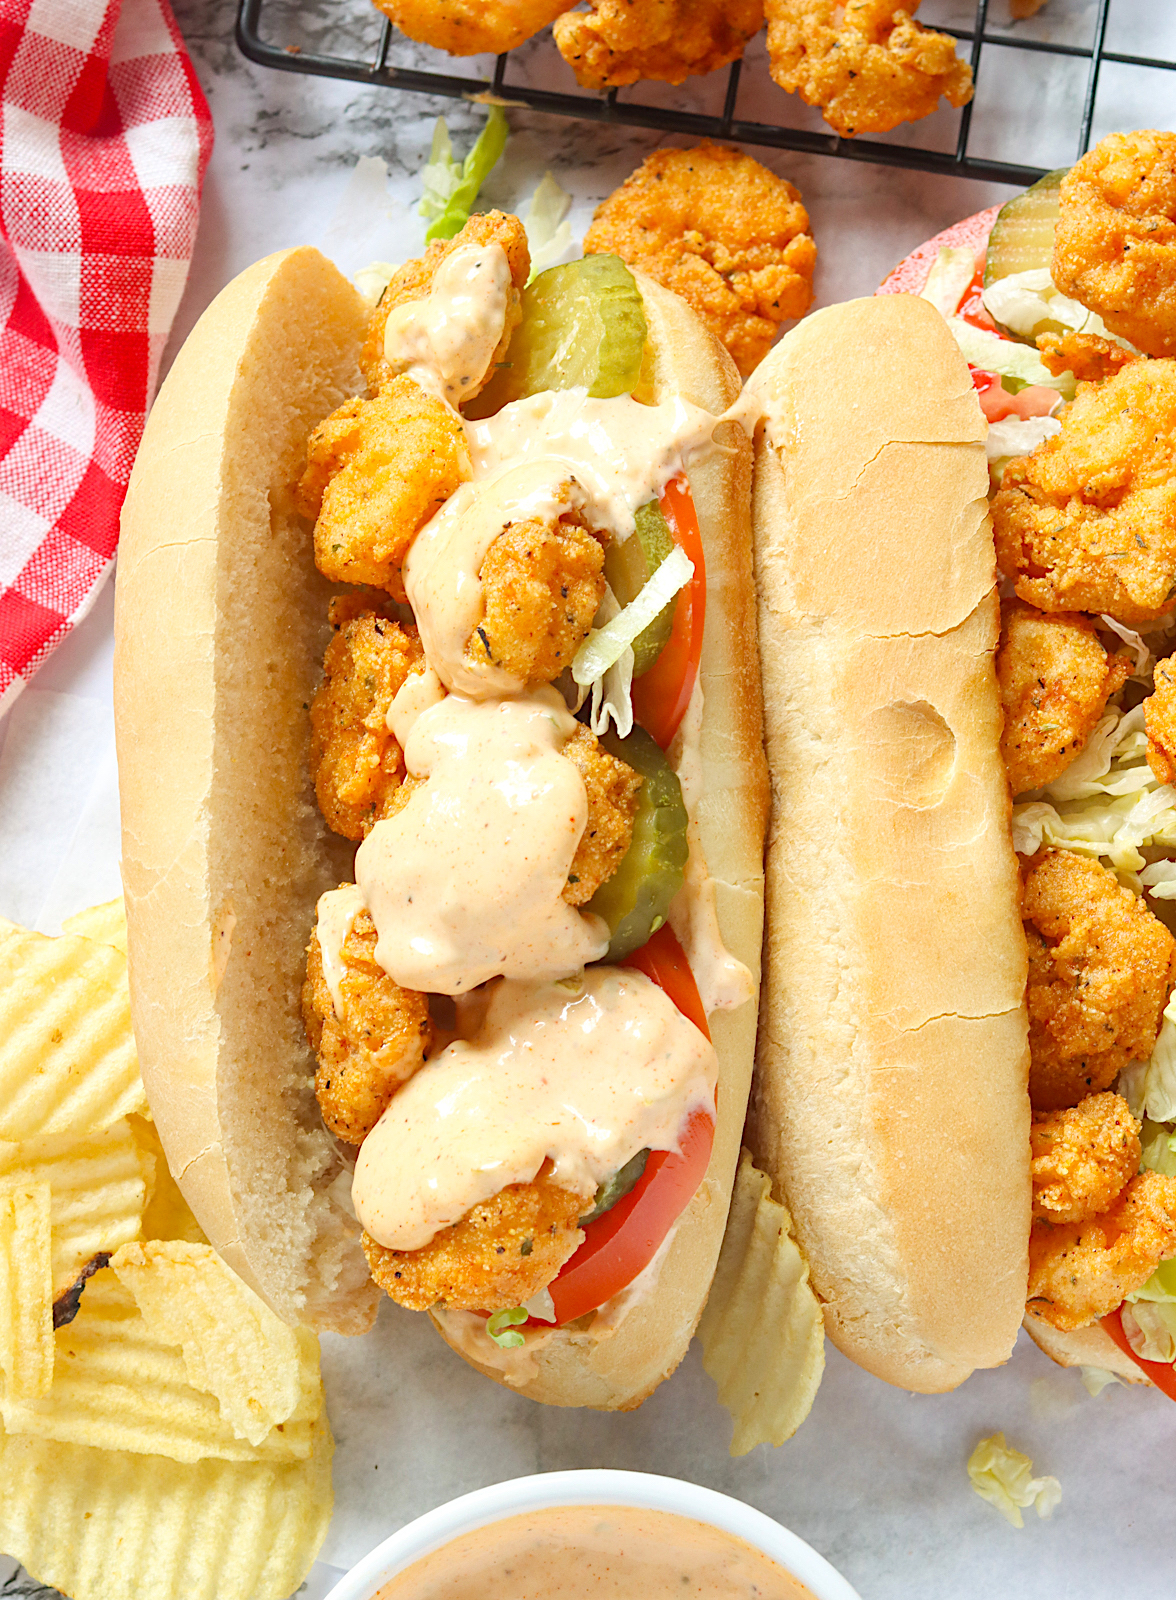 An amazing shrimp po' boy sandwich for classic Southern comfort